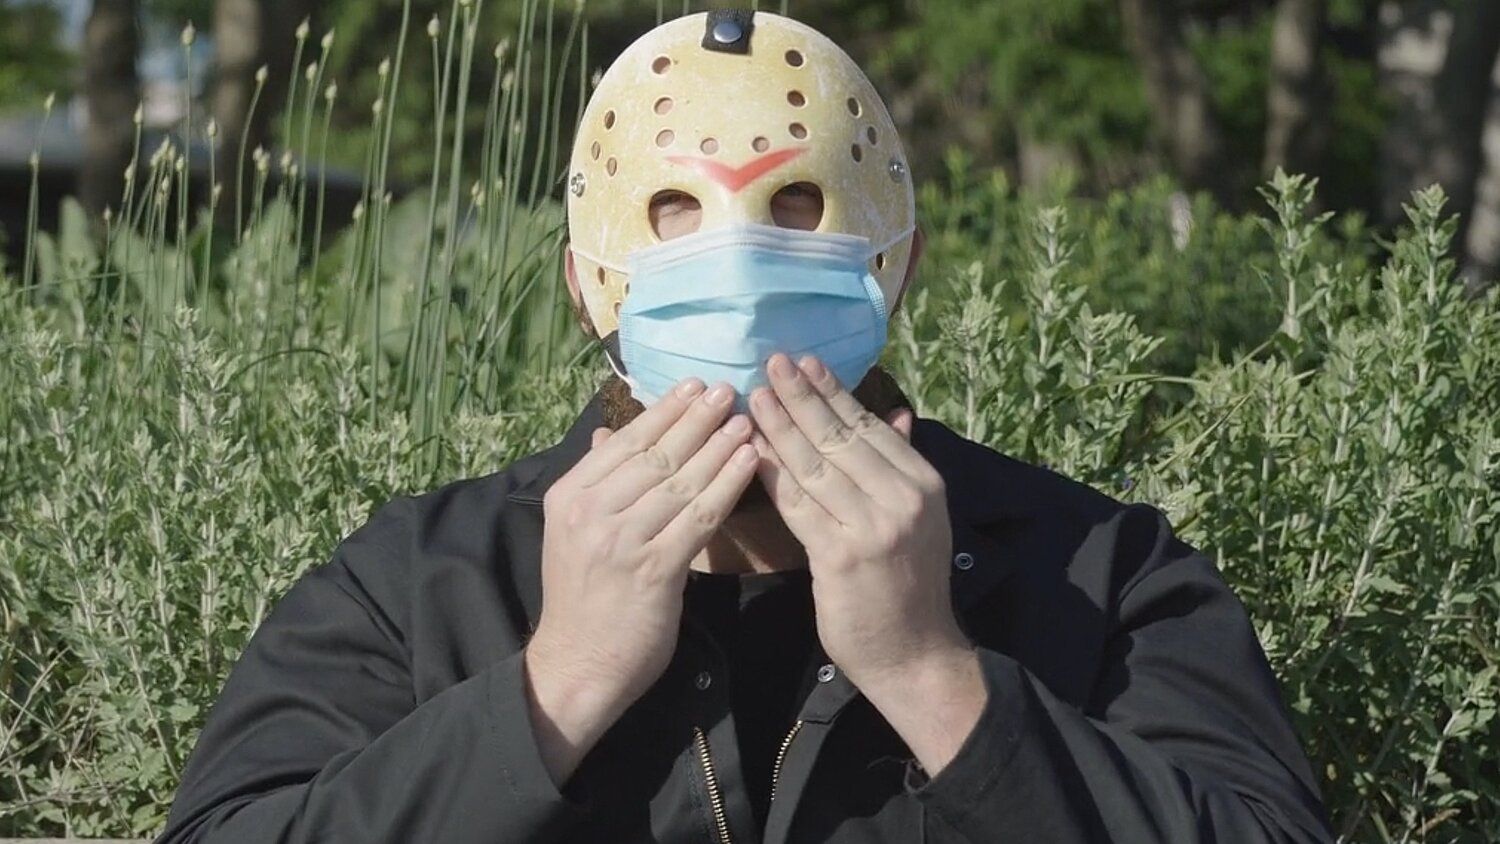 Comprometido predicción Víctor Killer from 'Friday the 13th' promotes face masks in ad campaign